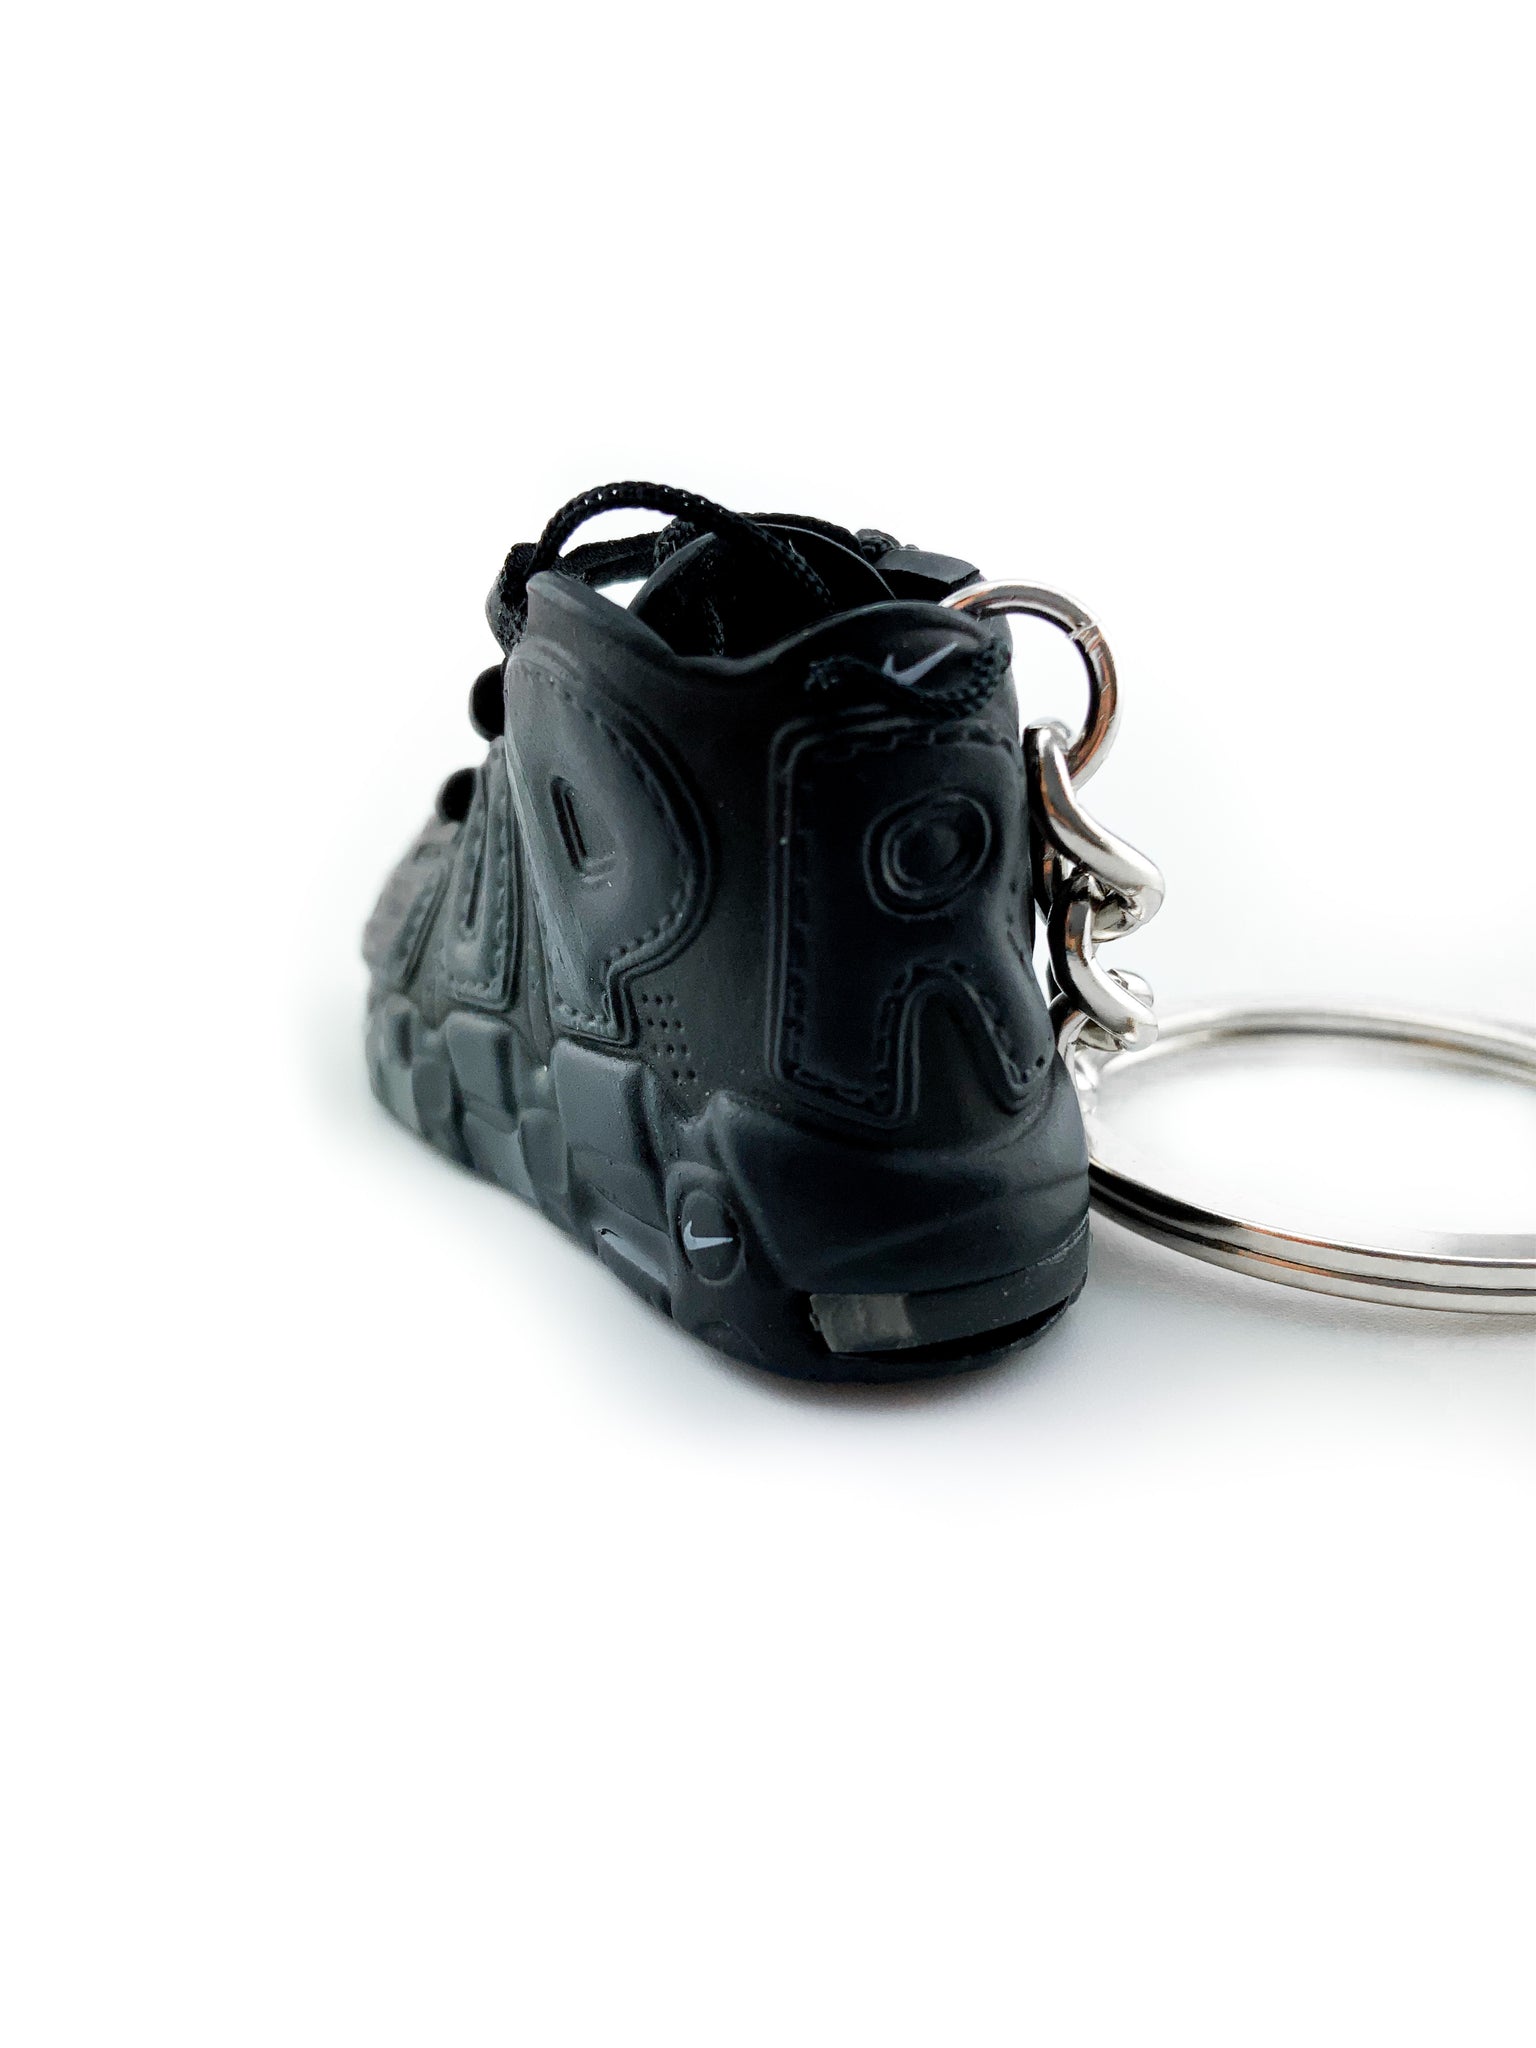 Mini Nike Air More Uptempo x Supreme 'Black' Replica Keychain - KLOUD9